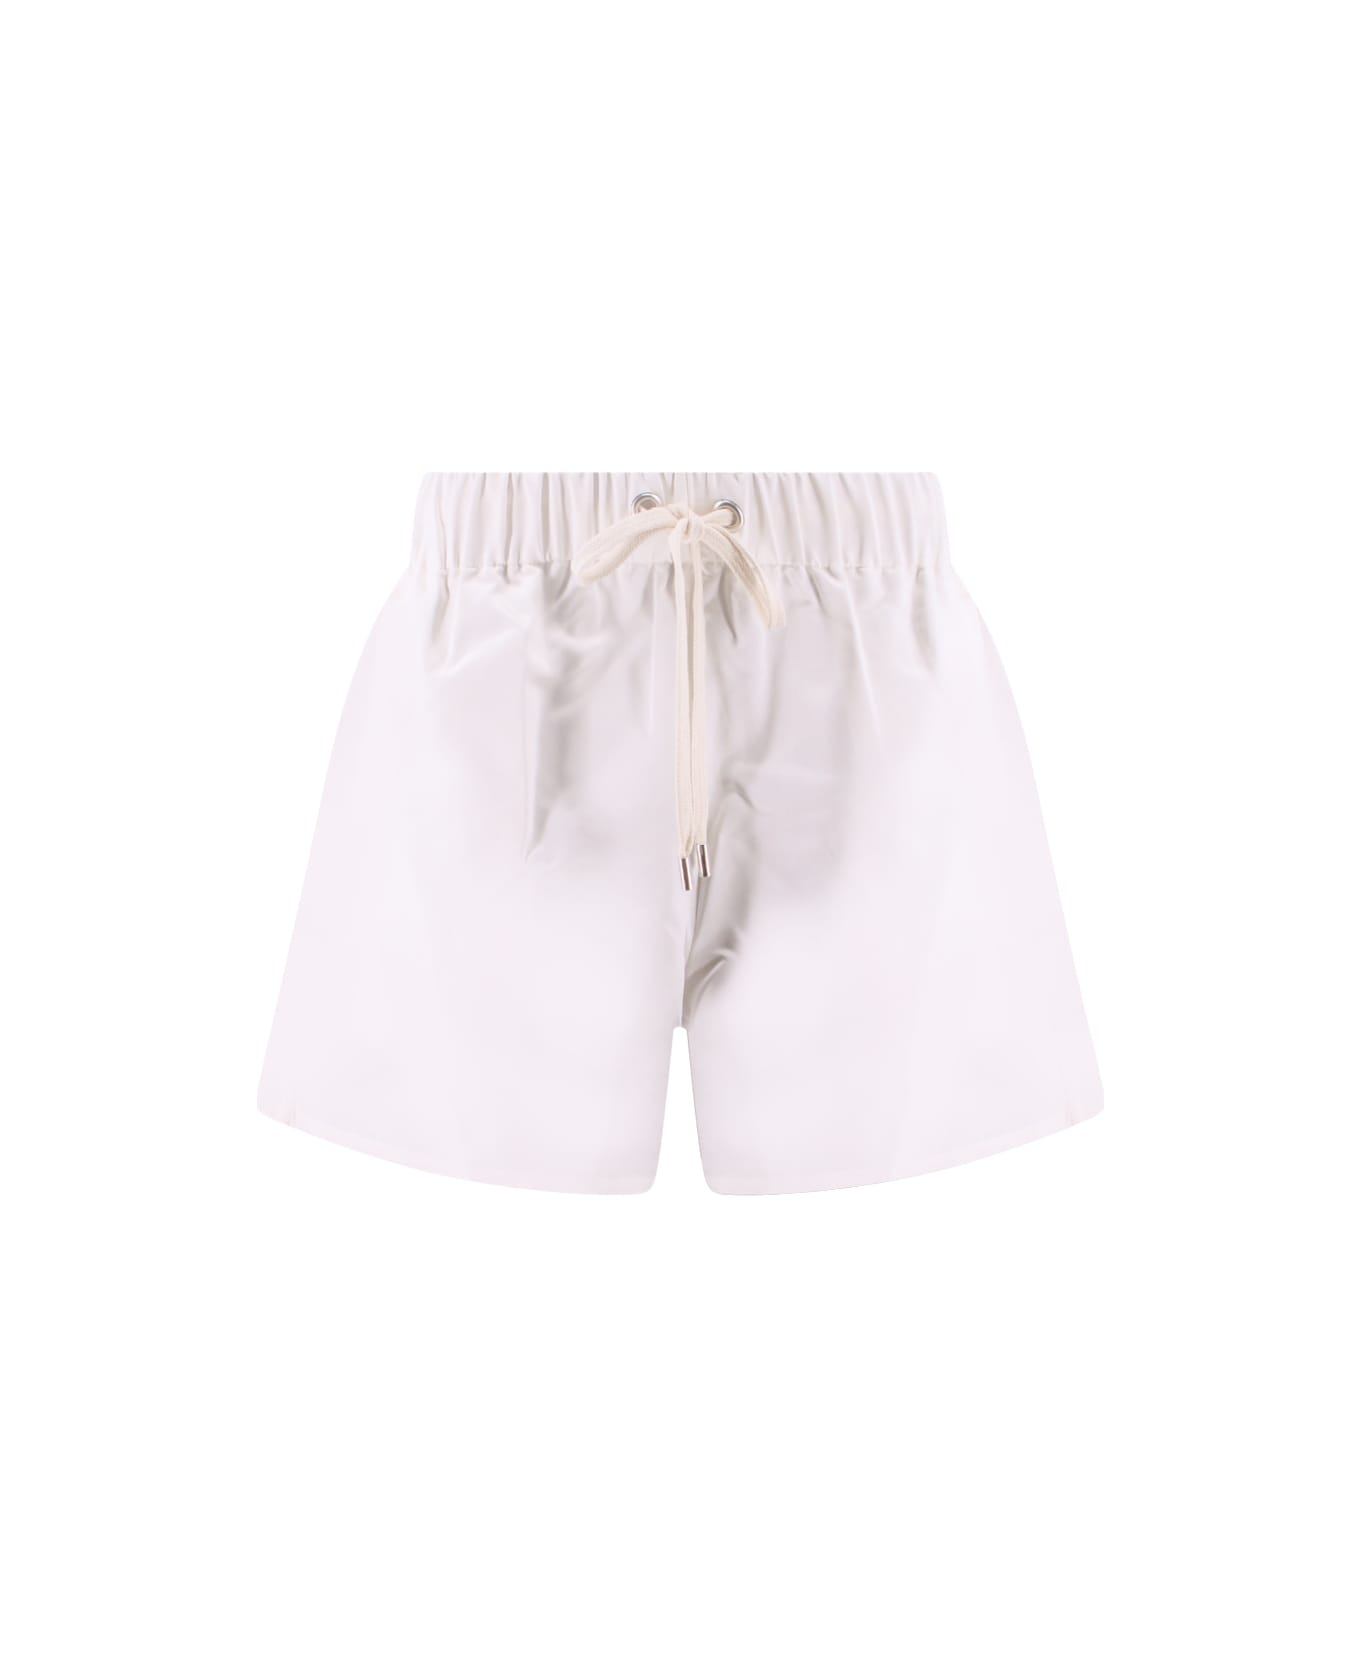 Sa Su Phi Shorts - White